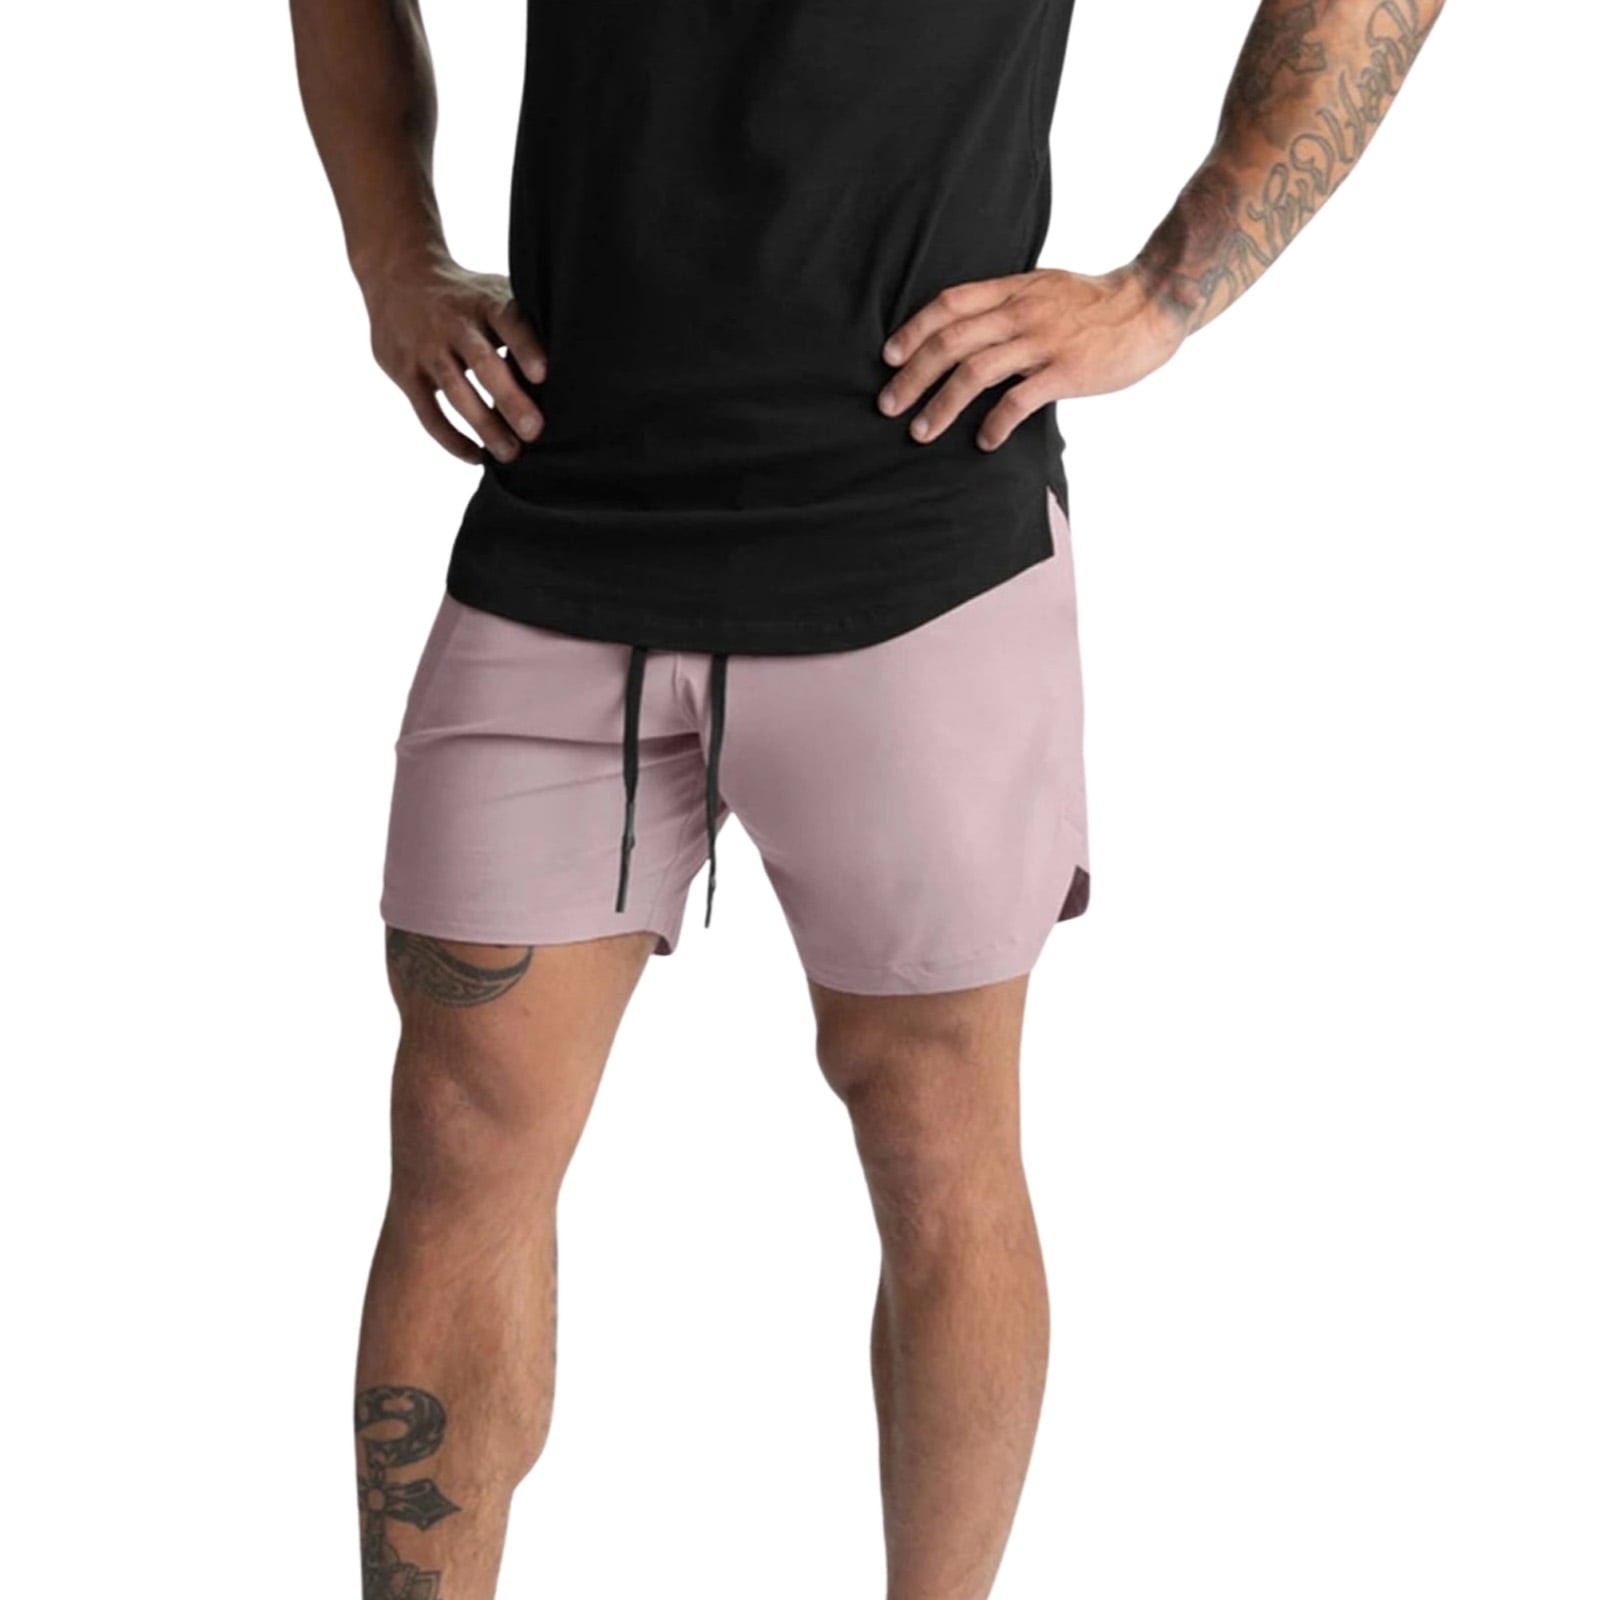 Luckinbaby Men's Running Gym Shorts Towel Loop Pockets Walmart.com